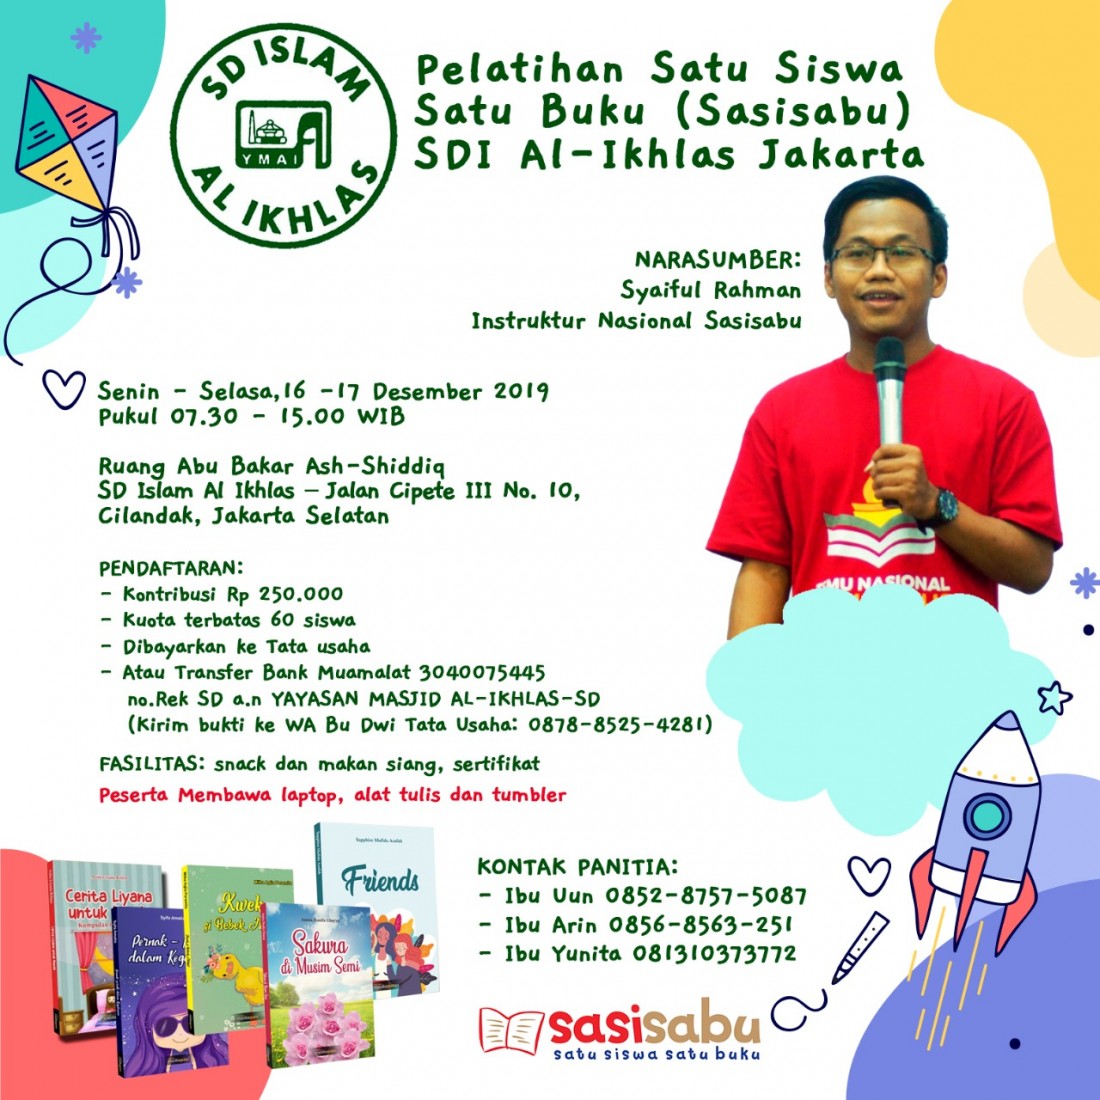 Pelatihan Menulis Satu Siswa Satu Buku (Sasisabu) SDI Al-Ikhlas Jakarta (16-17 Desember 2019)